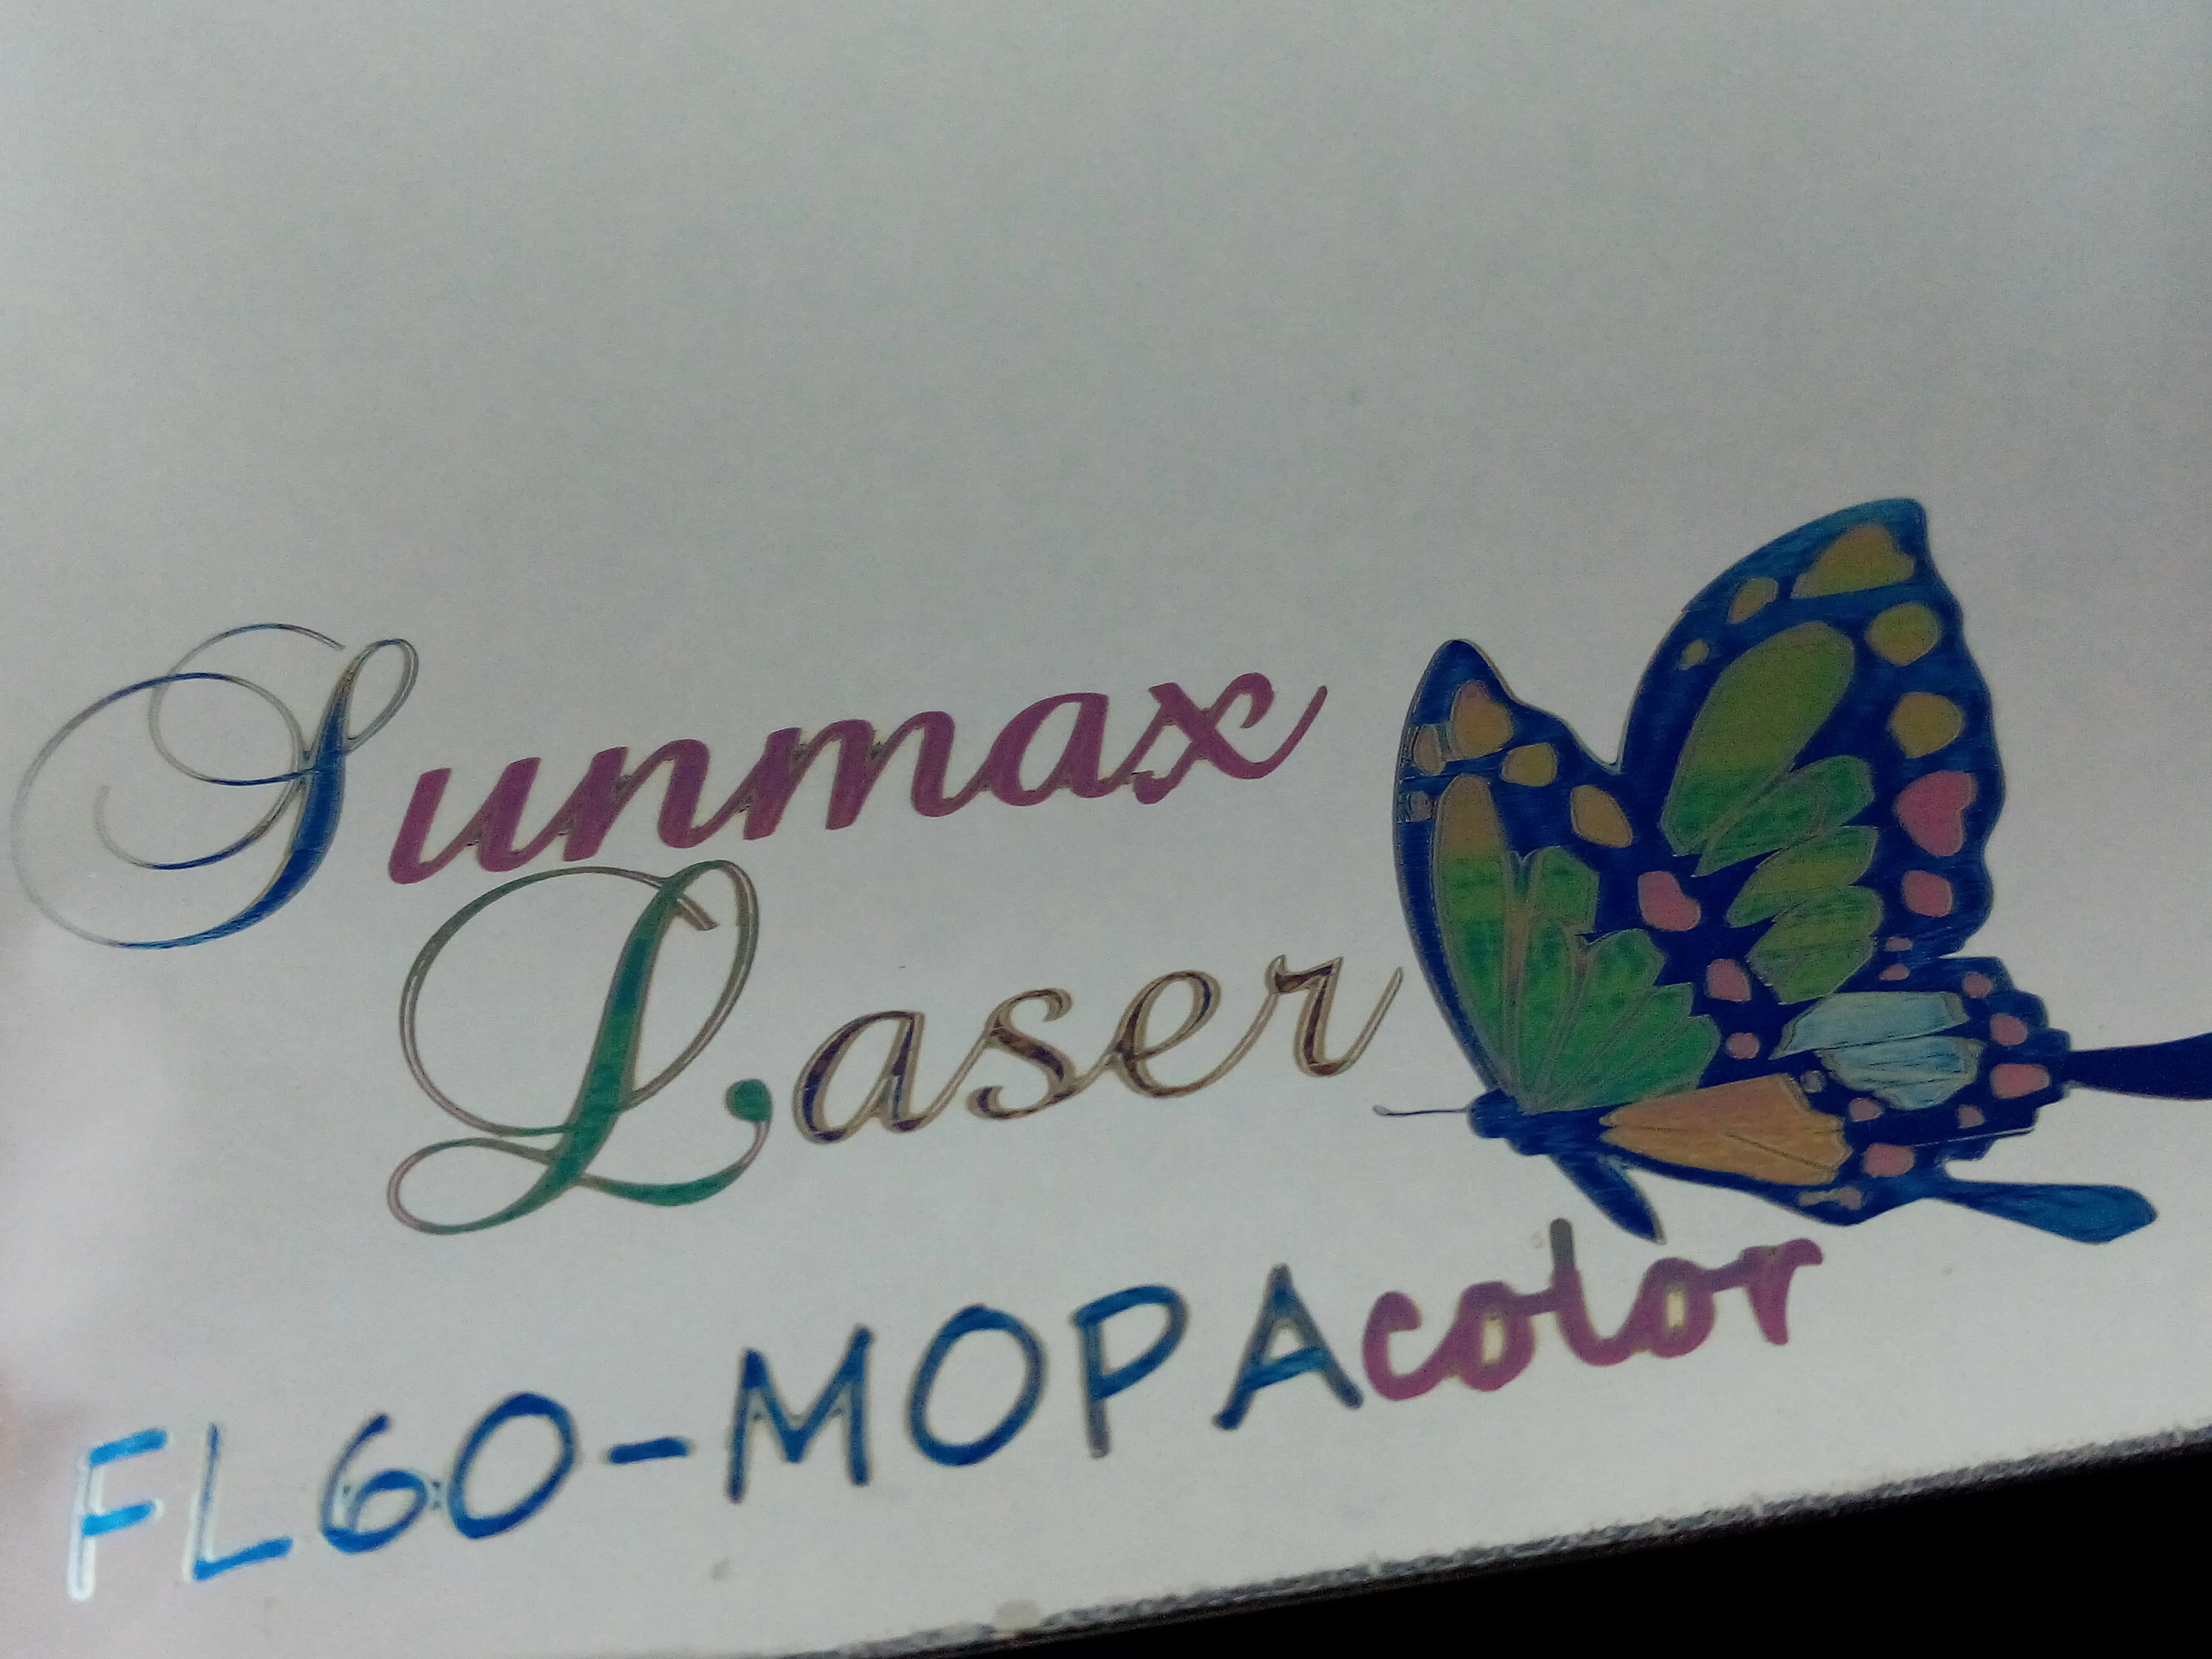 RSD-SUNMAX-FL60MOPAcolor sample